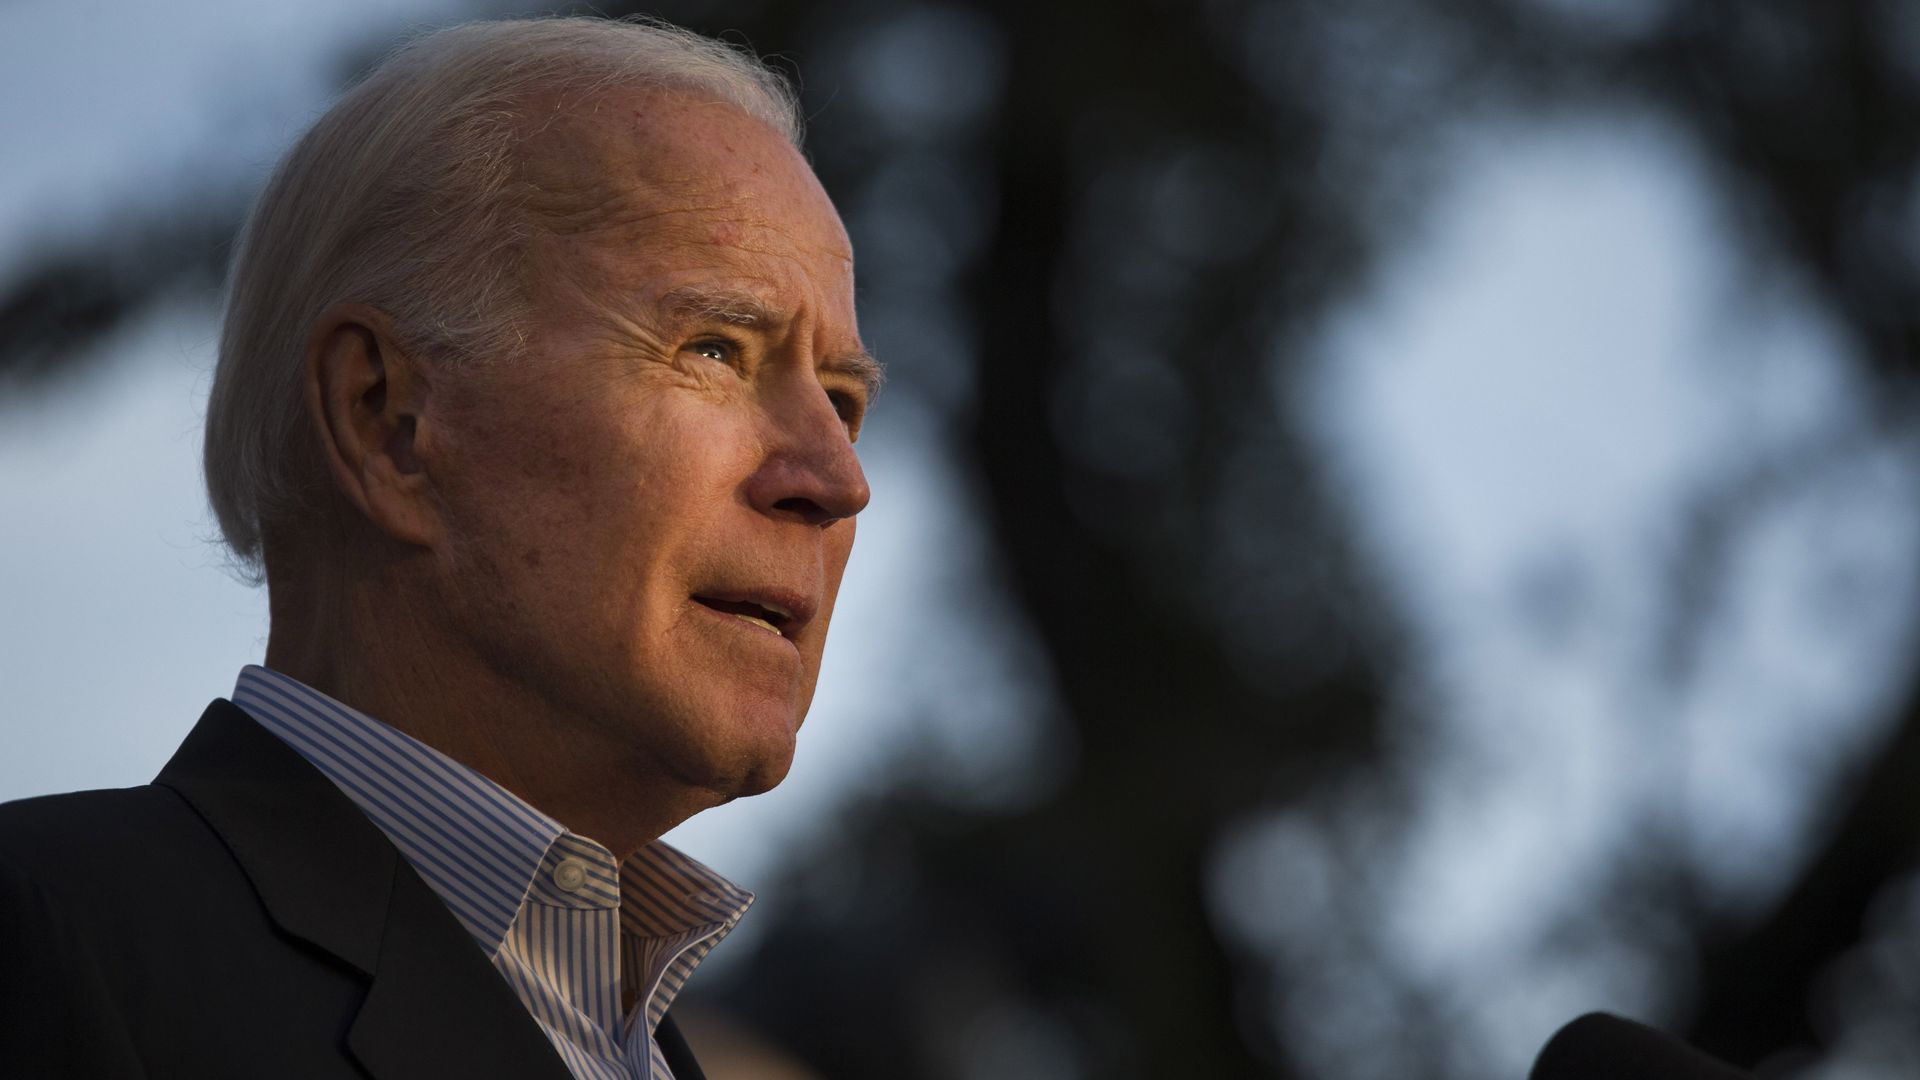 Joe Biden's medical report shows he is a healthy, vigorous, 77